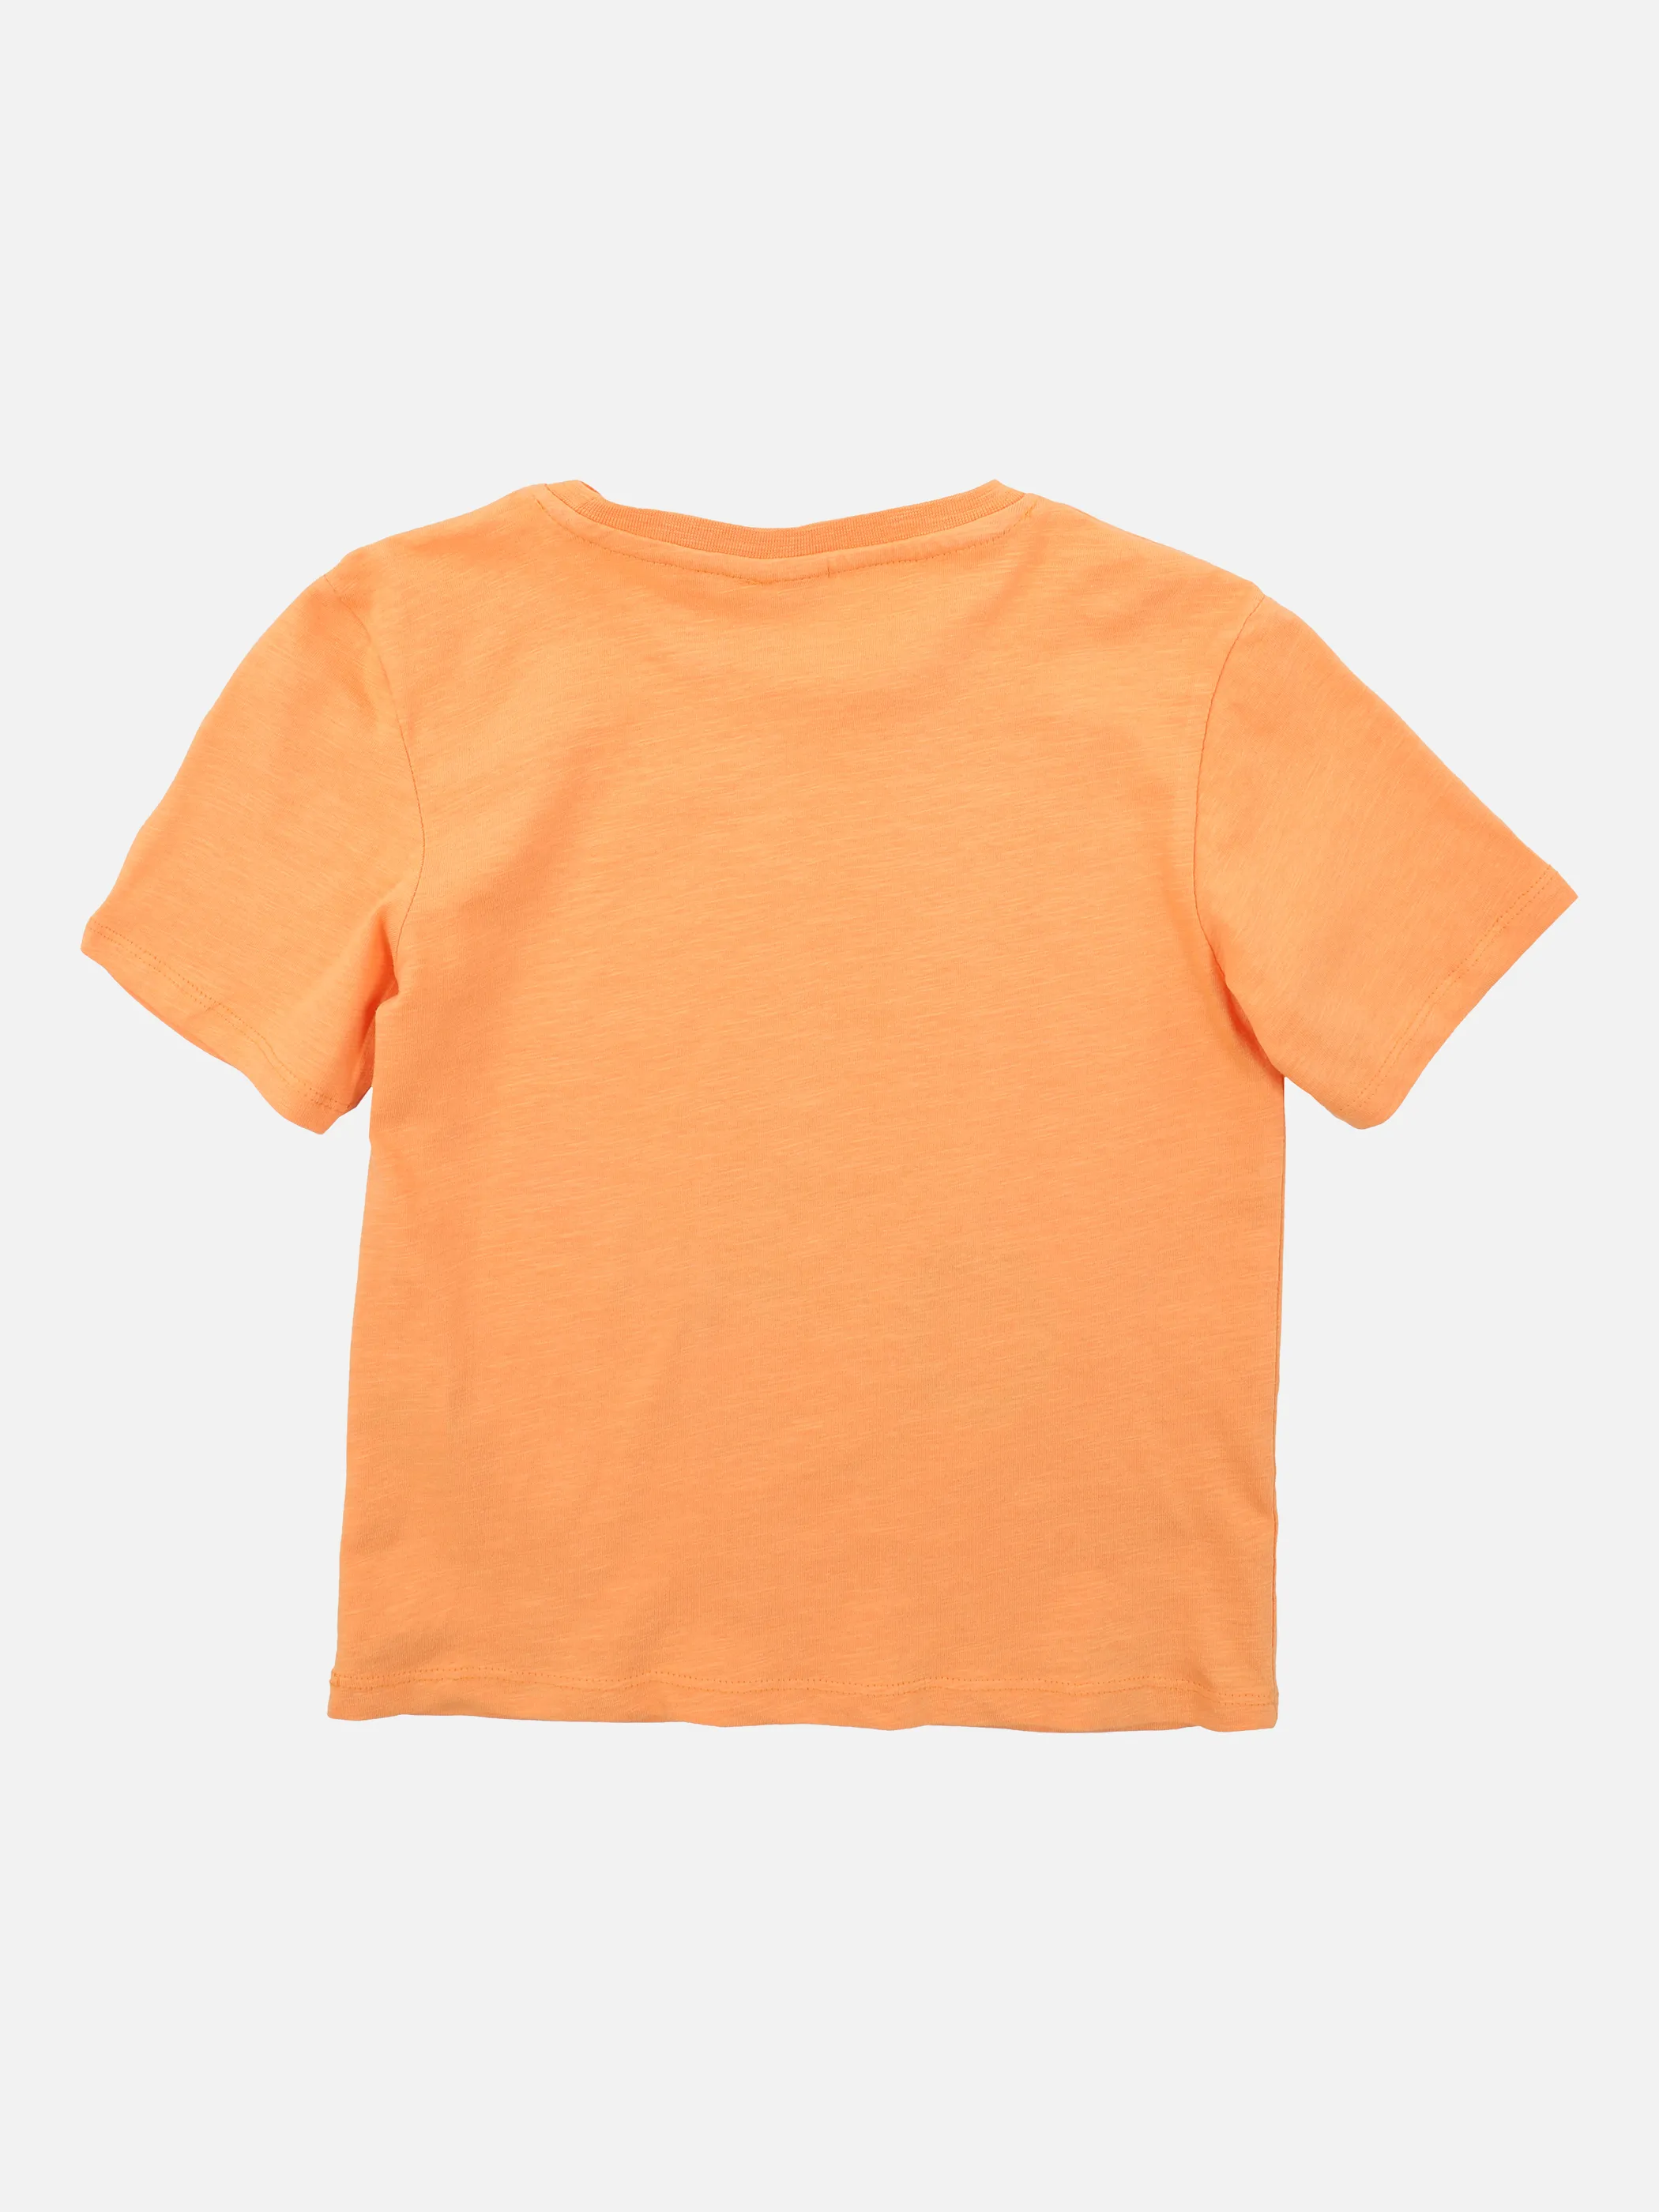 Stop + Go MB TShirt in orange mit Front- Orange 862793 ORANGE 2